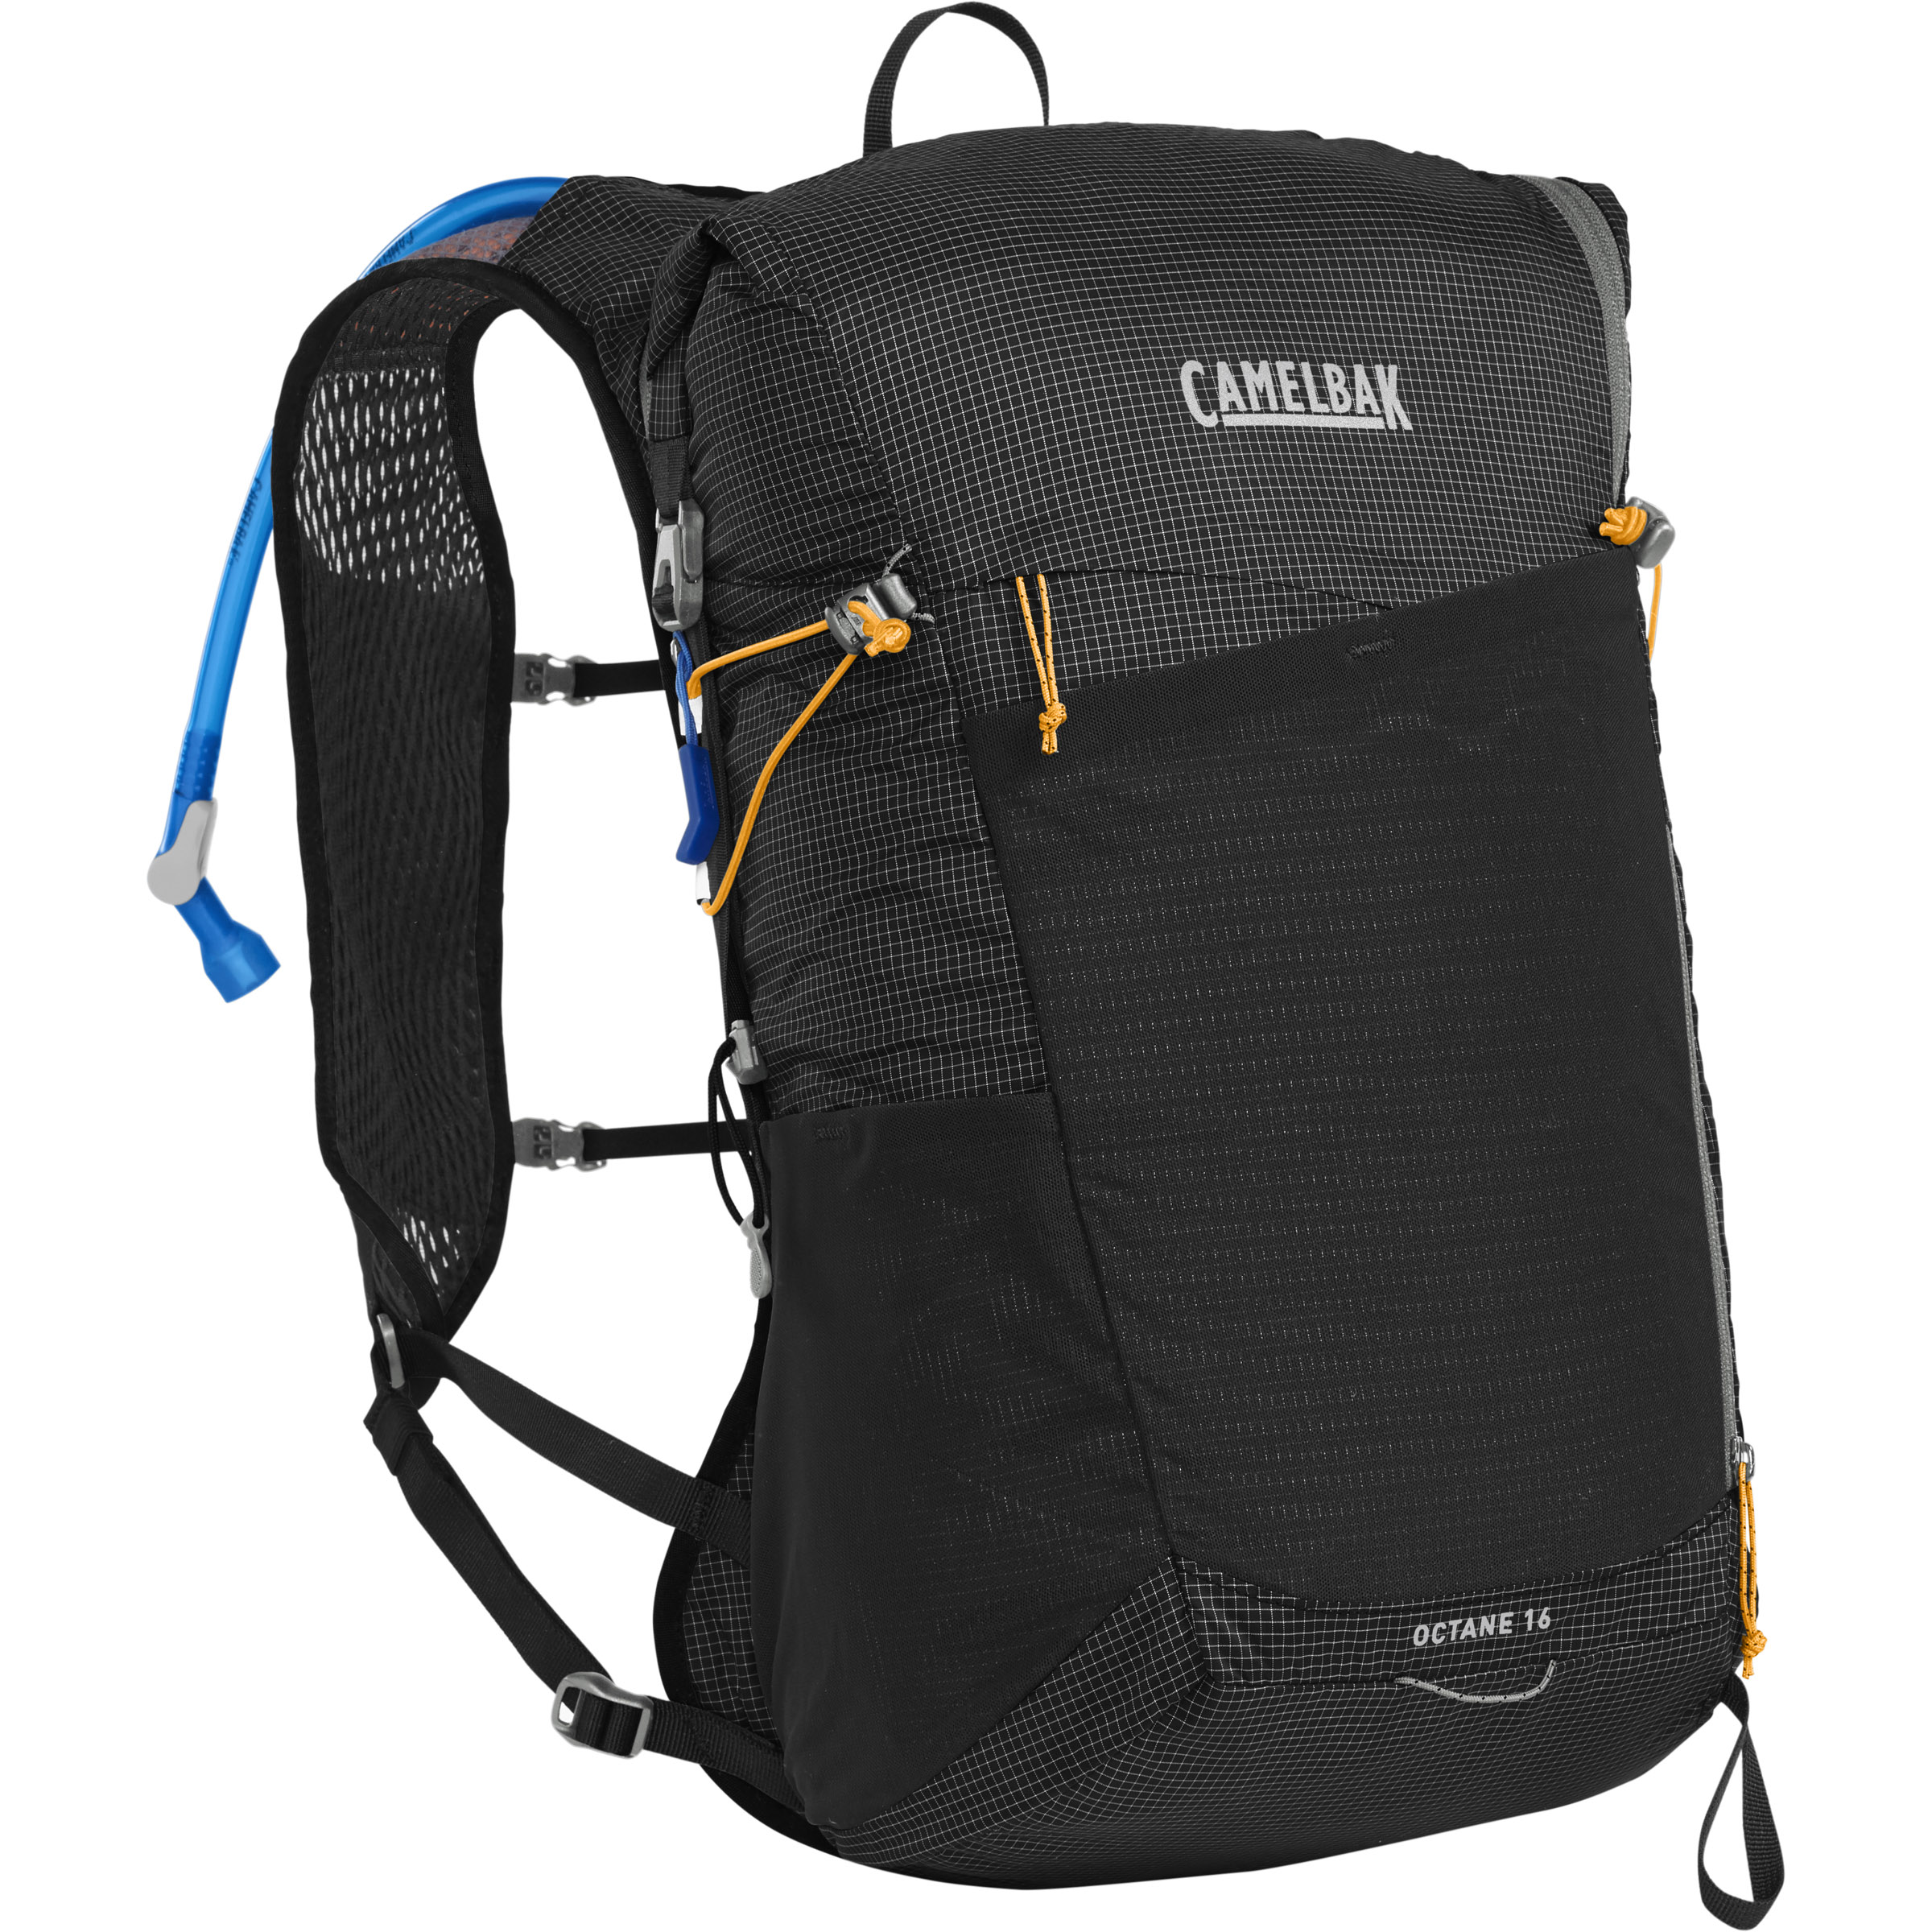 CamelBak Octane 22 Review - Running Vest Meets Hiking Pack